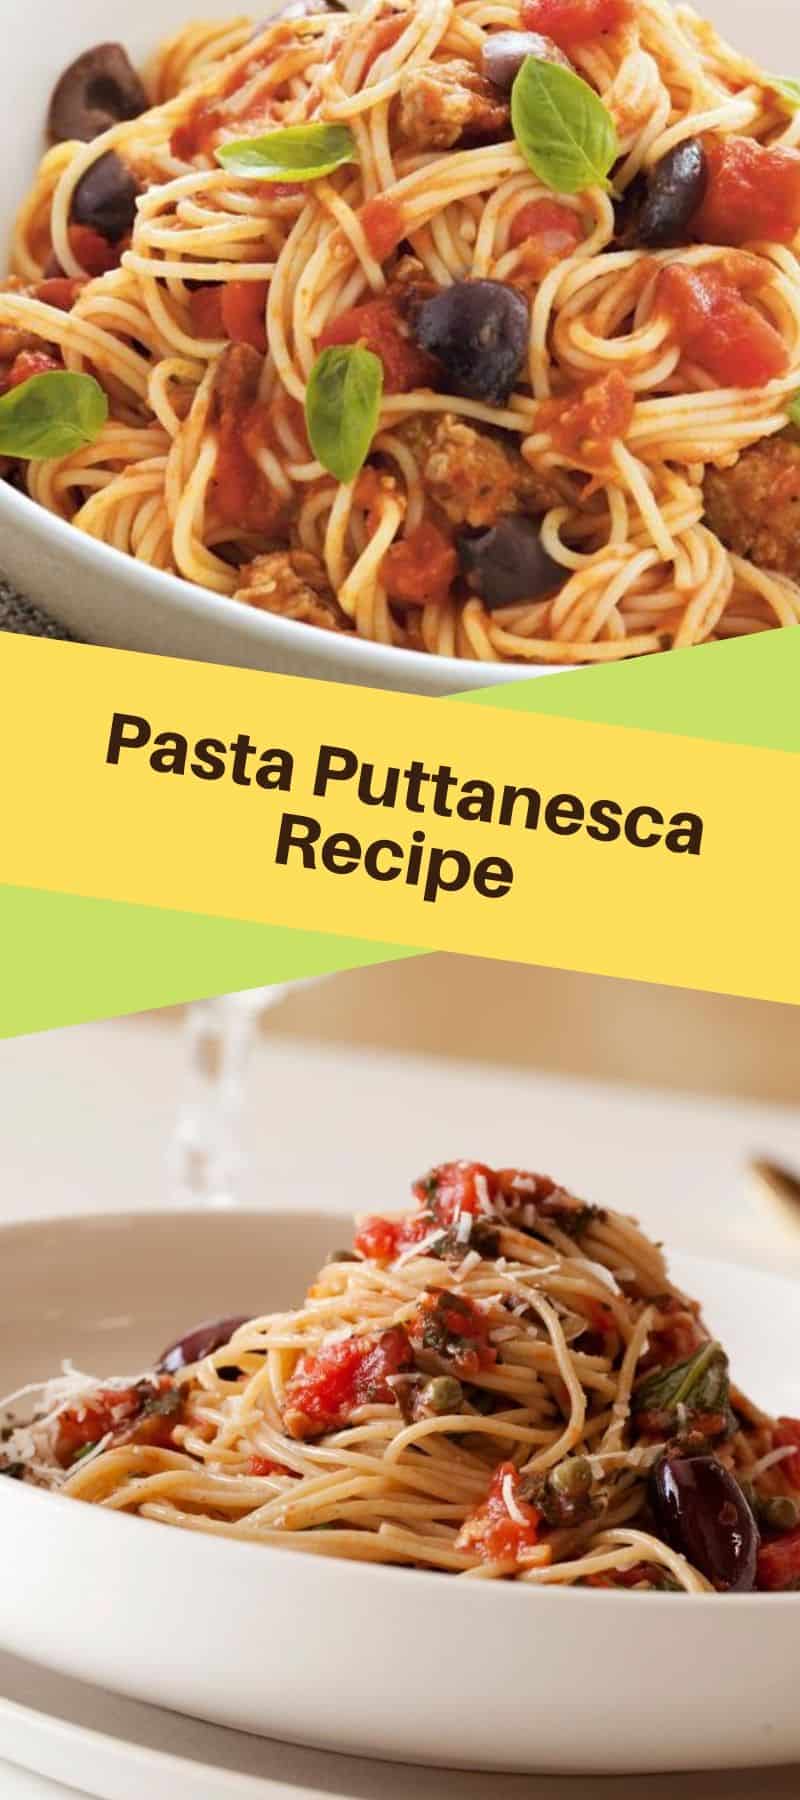 Pasta Puttanesca Recipe